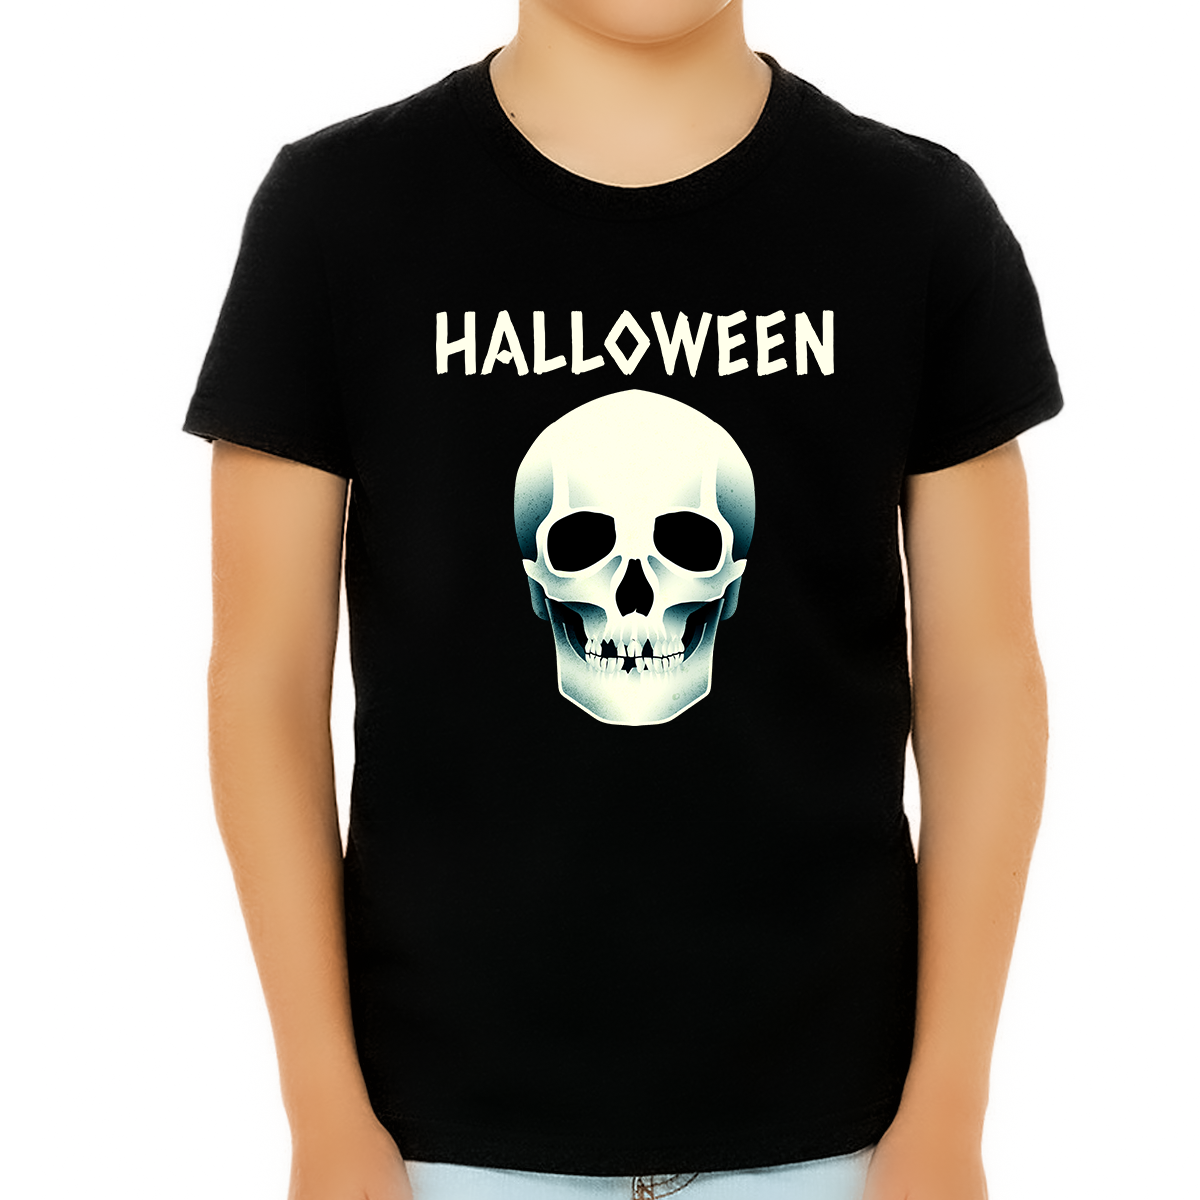 Fire Fit Designs Skull Shirt Boys Halloween Shirt Skeleton Shirt Boys Halloween Tshirts Boys Halloween Shirts for Kids